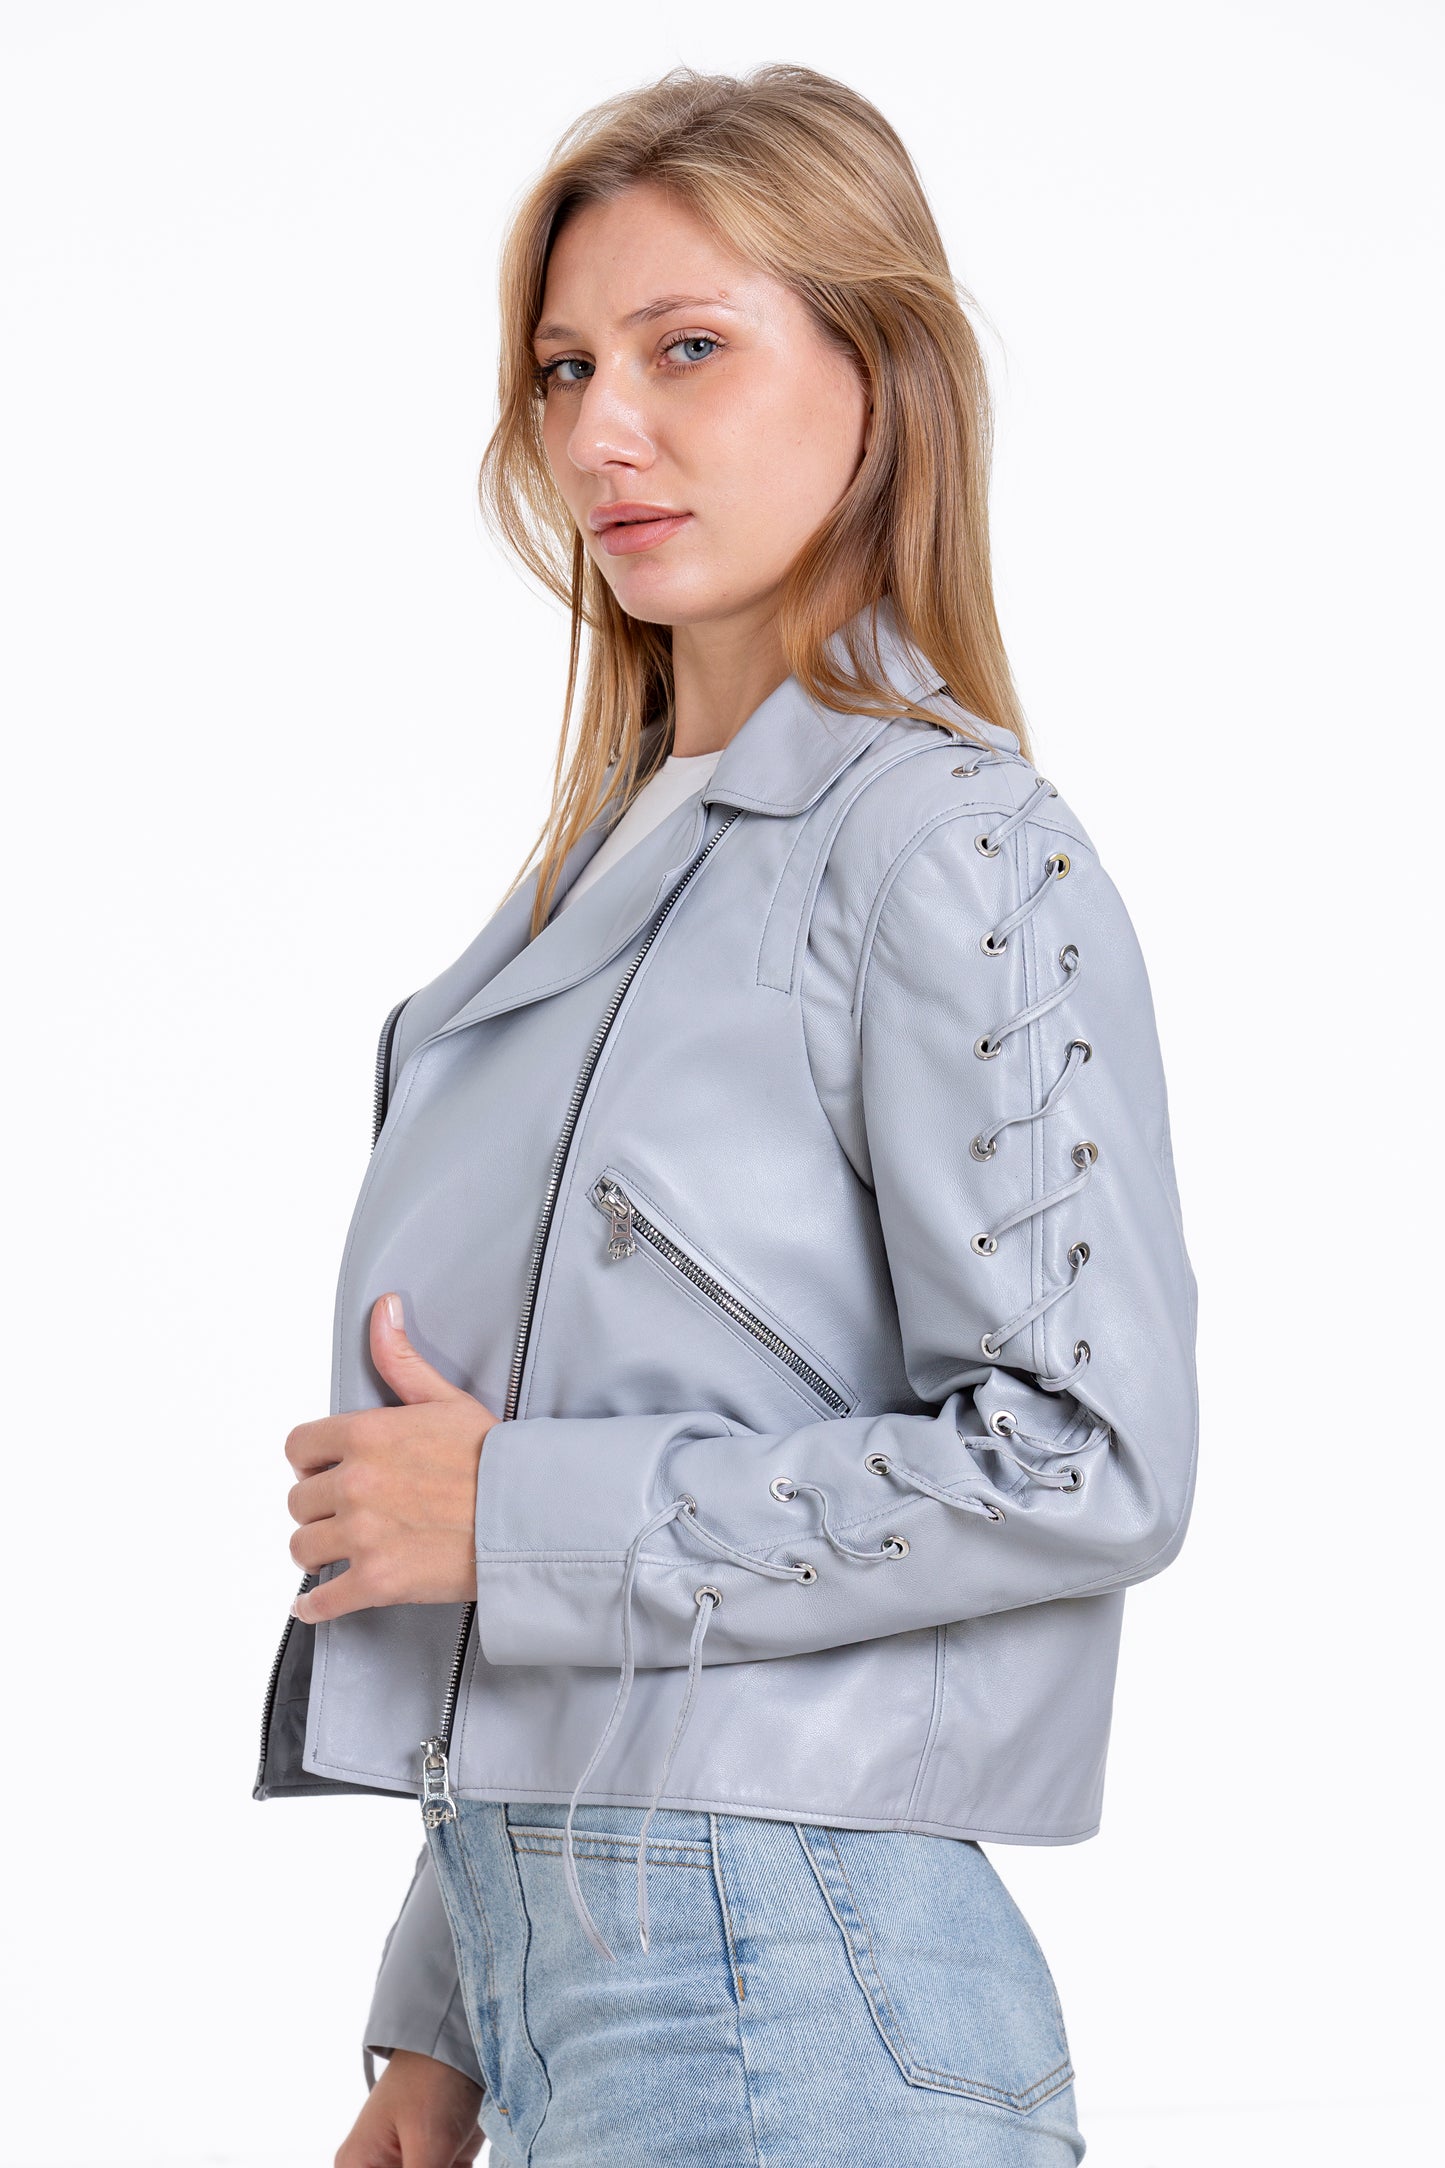 The Isola Leather Gray Jacket